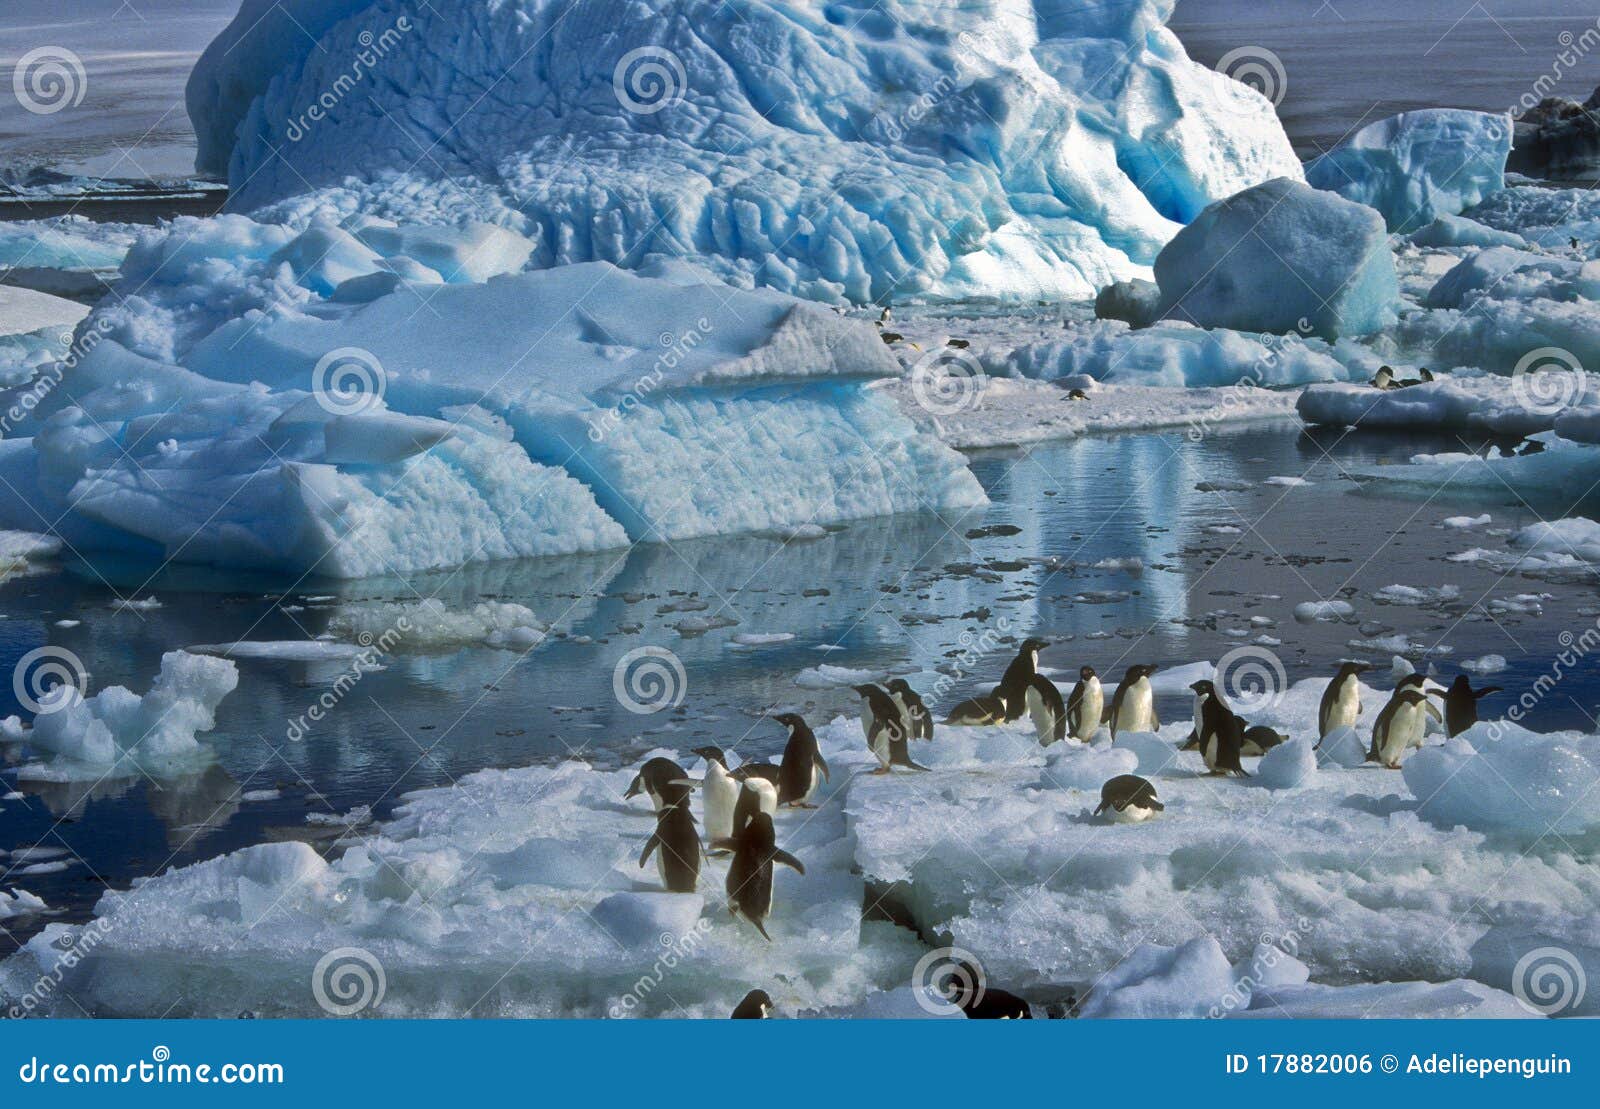 adelie penguins on ice, antarctica